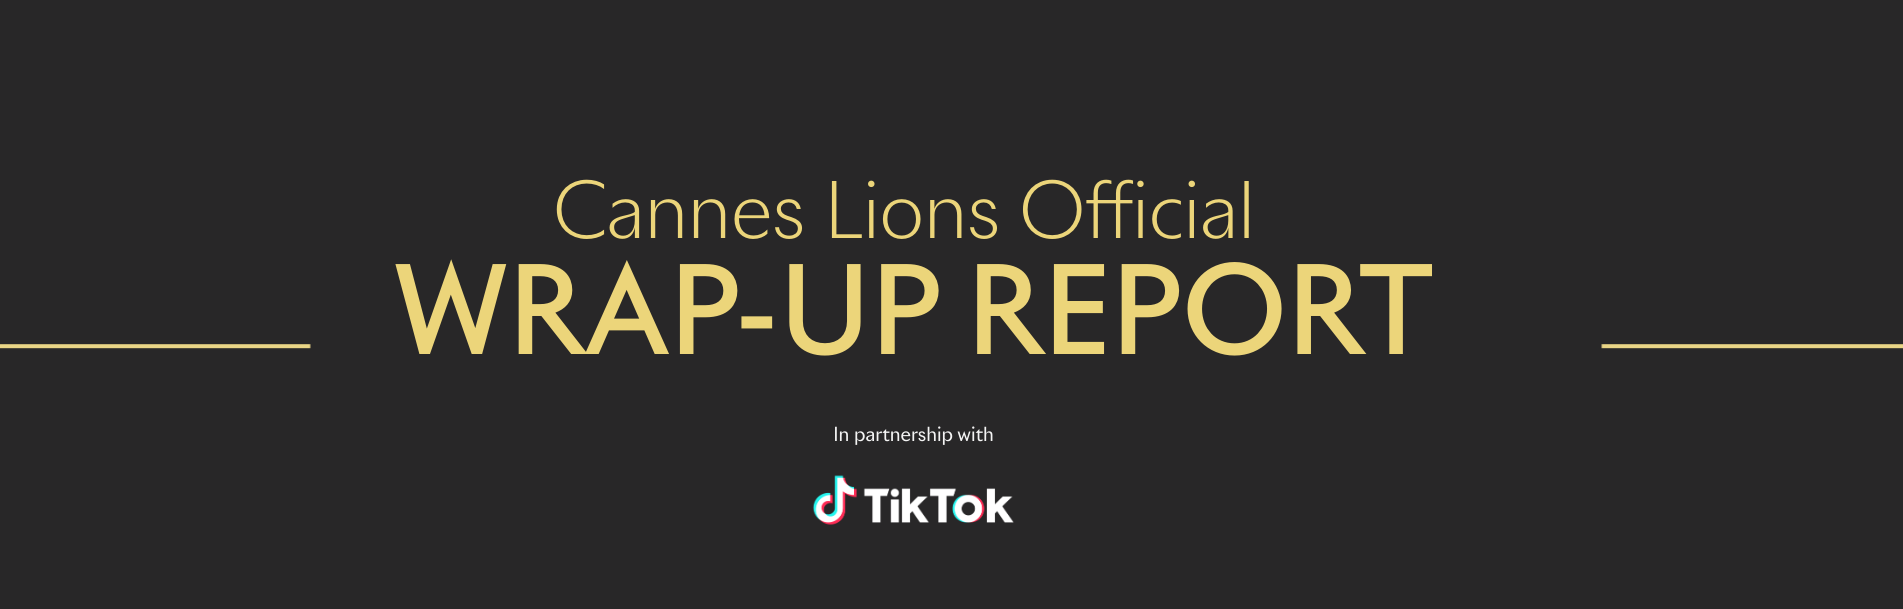 LIONS divulga o Wrap-up Cannes Lions 2022